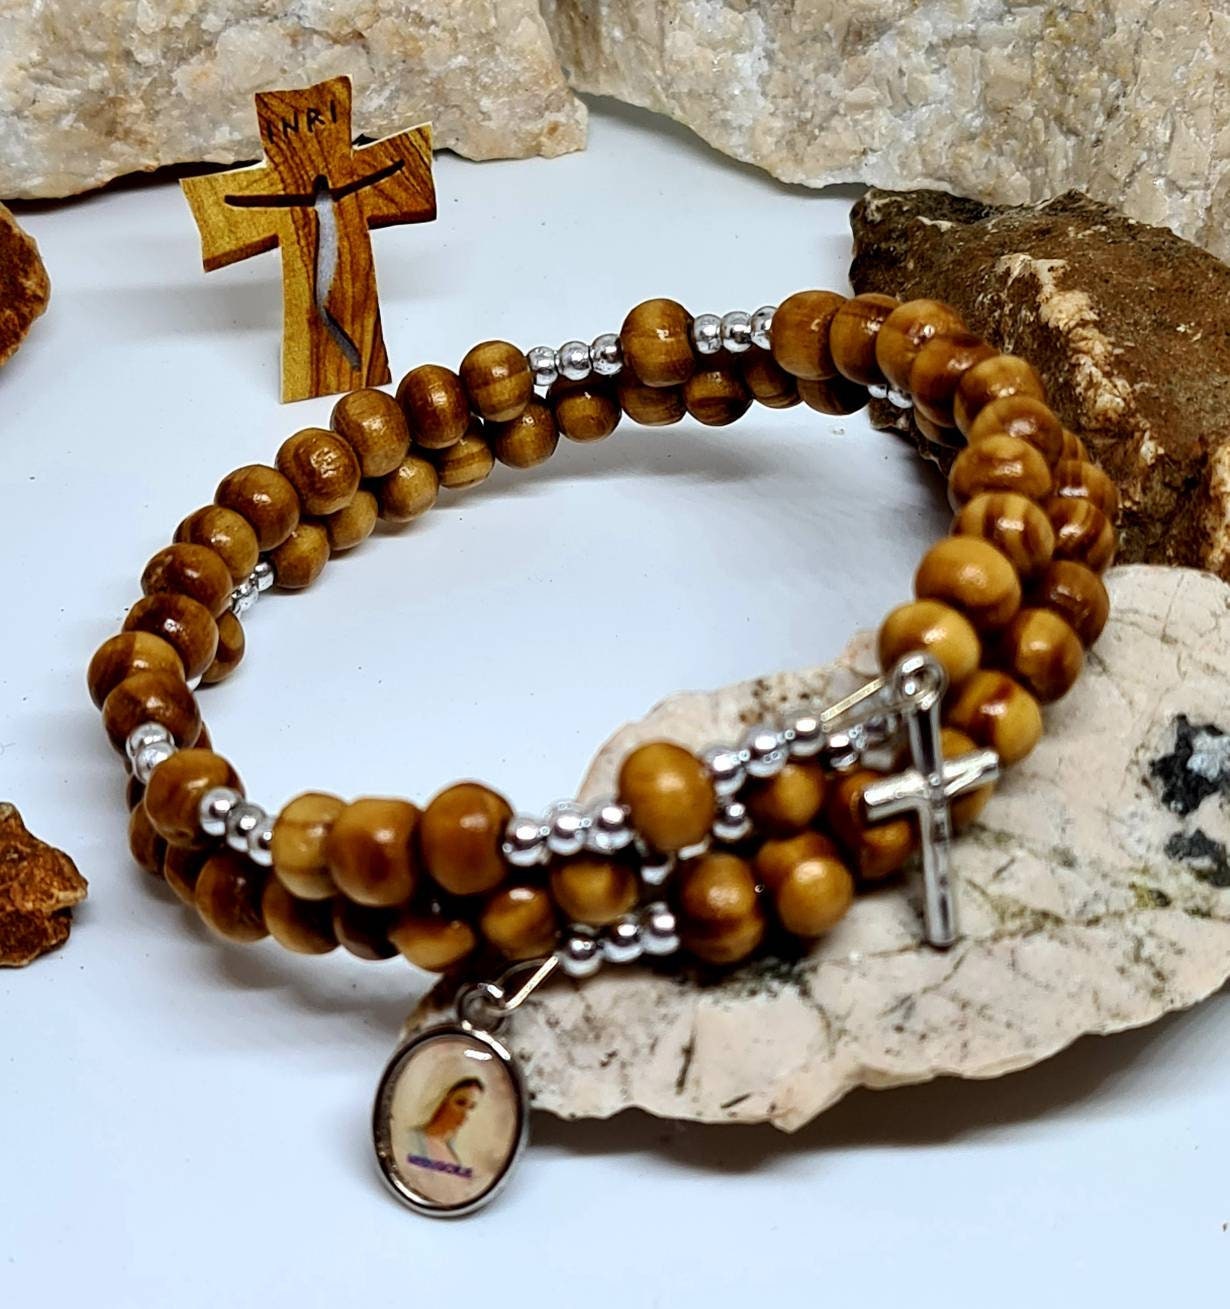 YEUHTLL Rosary Bracelet with Pine Wood Beads Hemp Cords Brings Good Luck  Ornaments Knot - Walmart.com